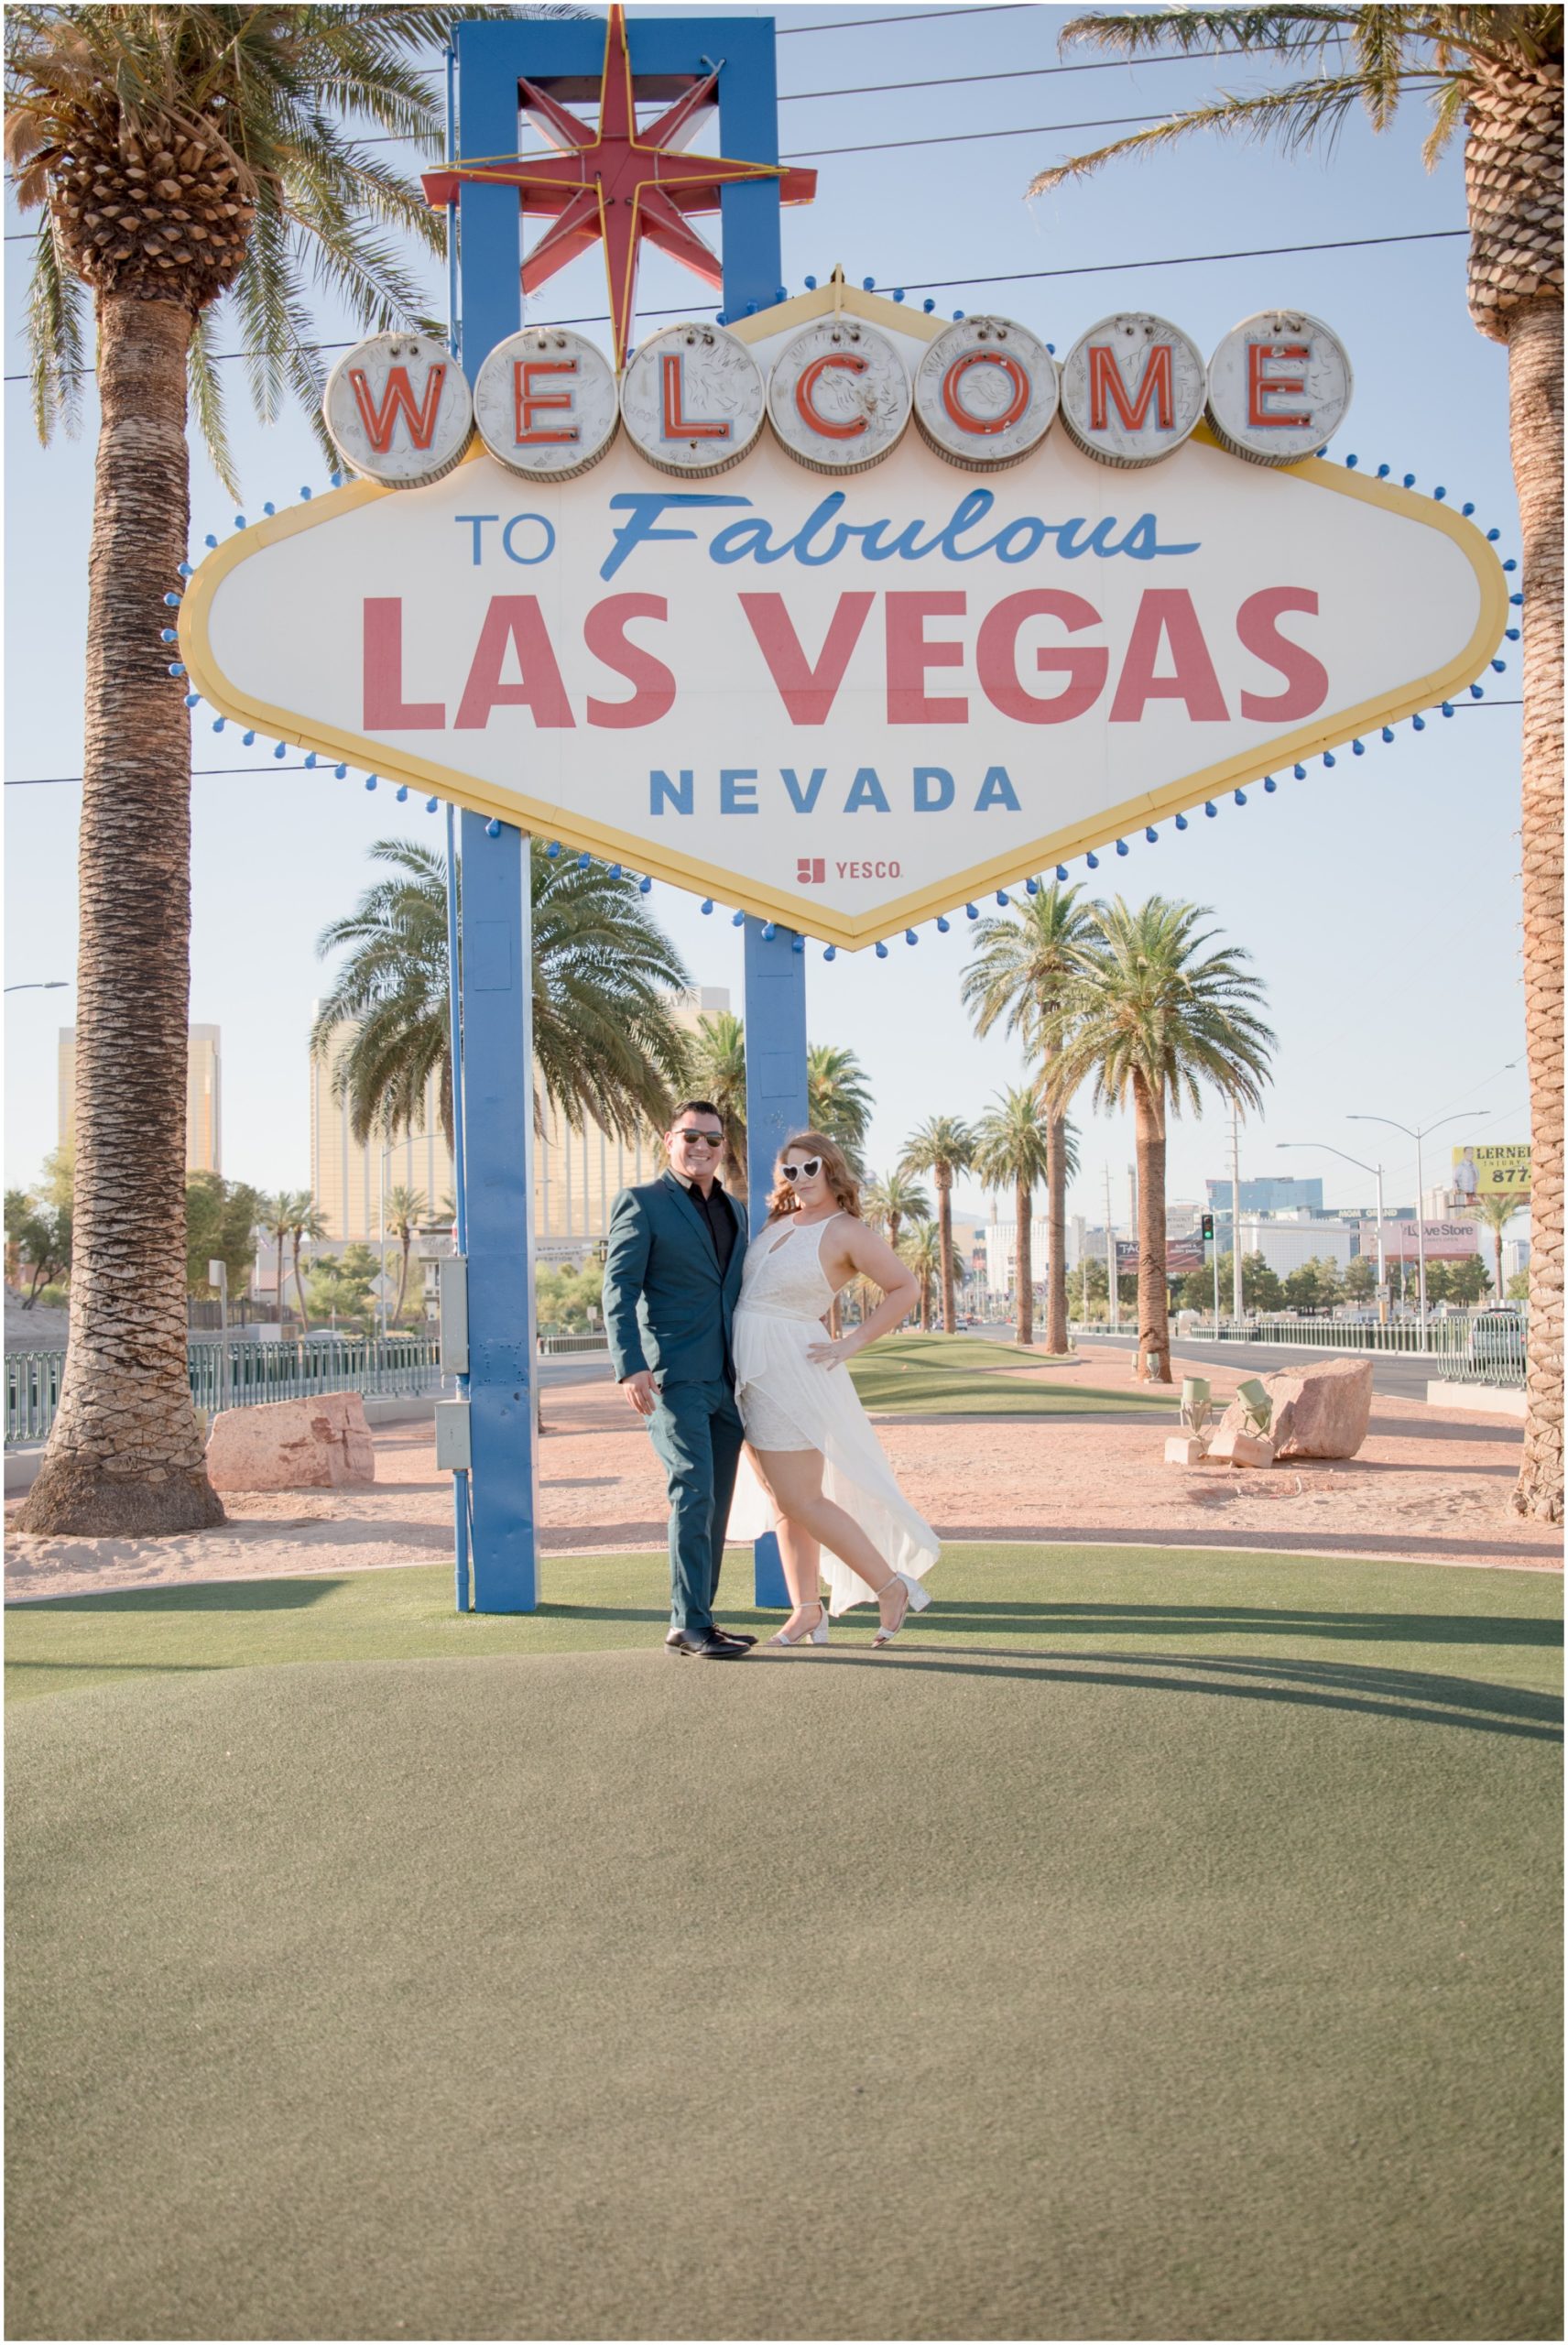 Las Vegas Sign Photoshoot 